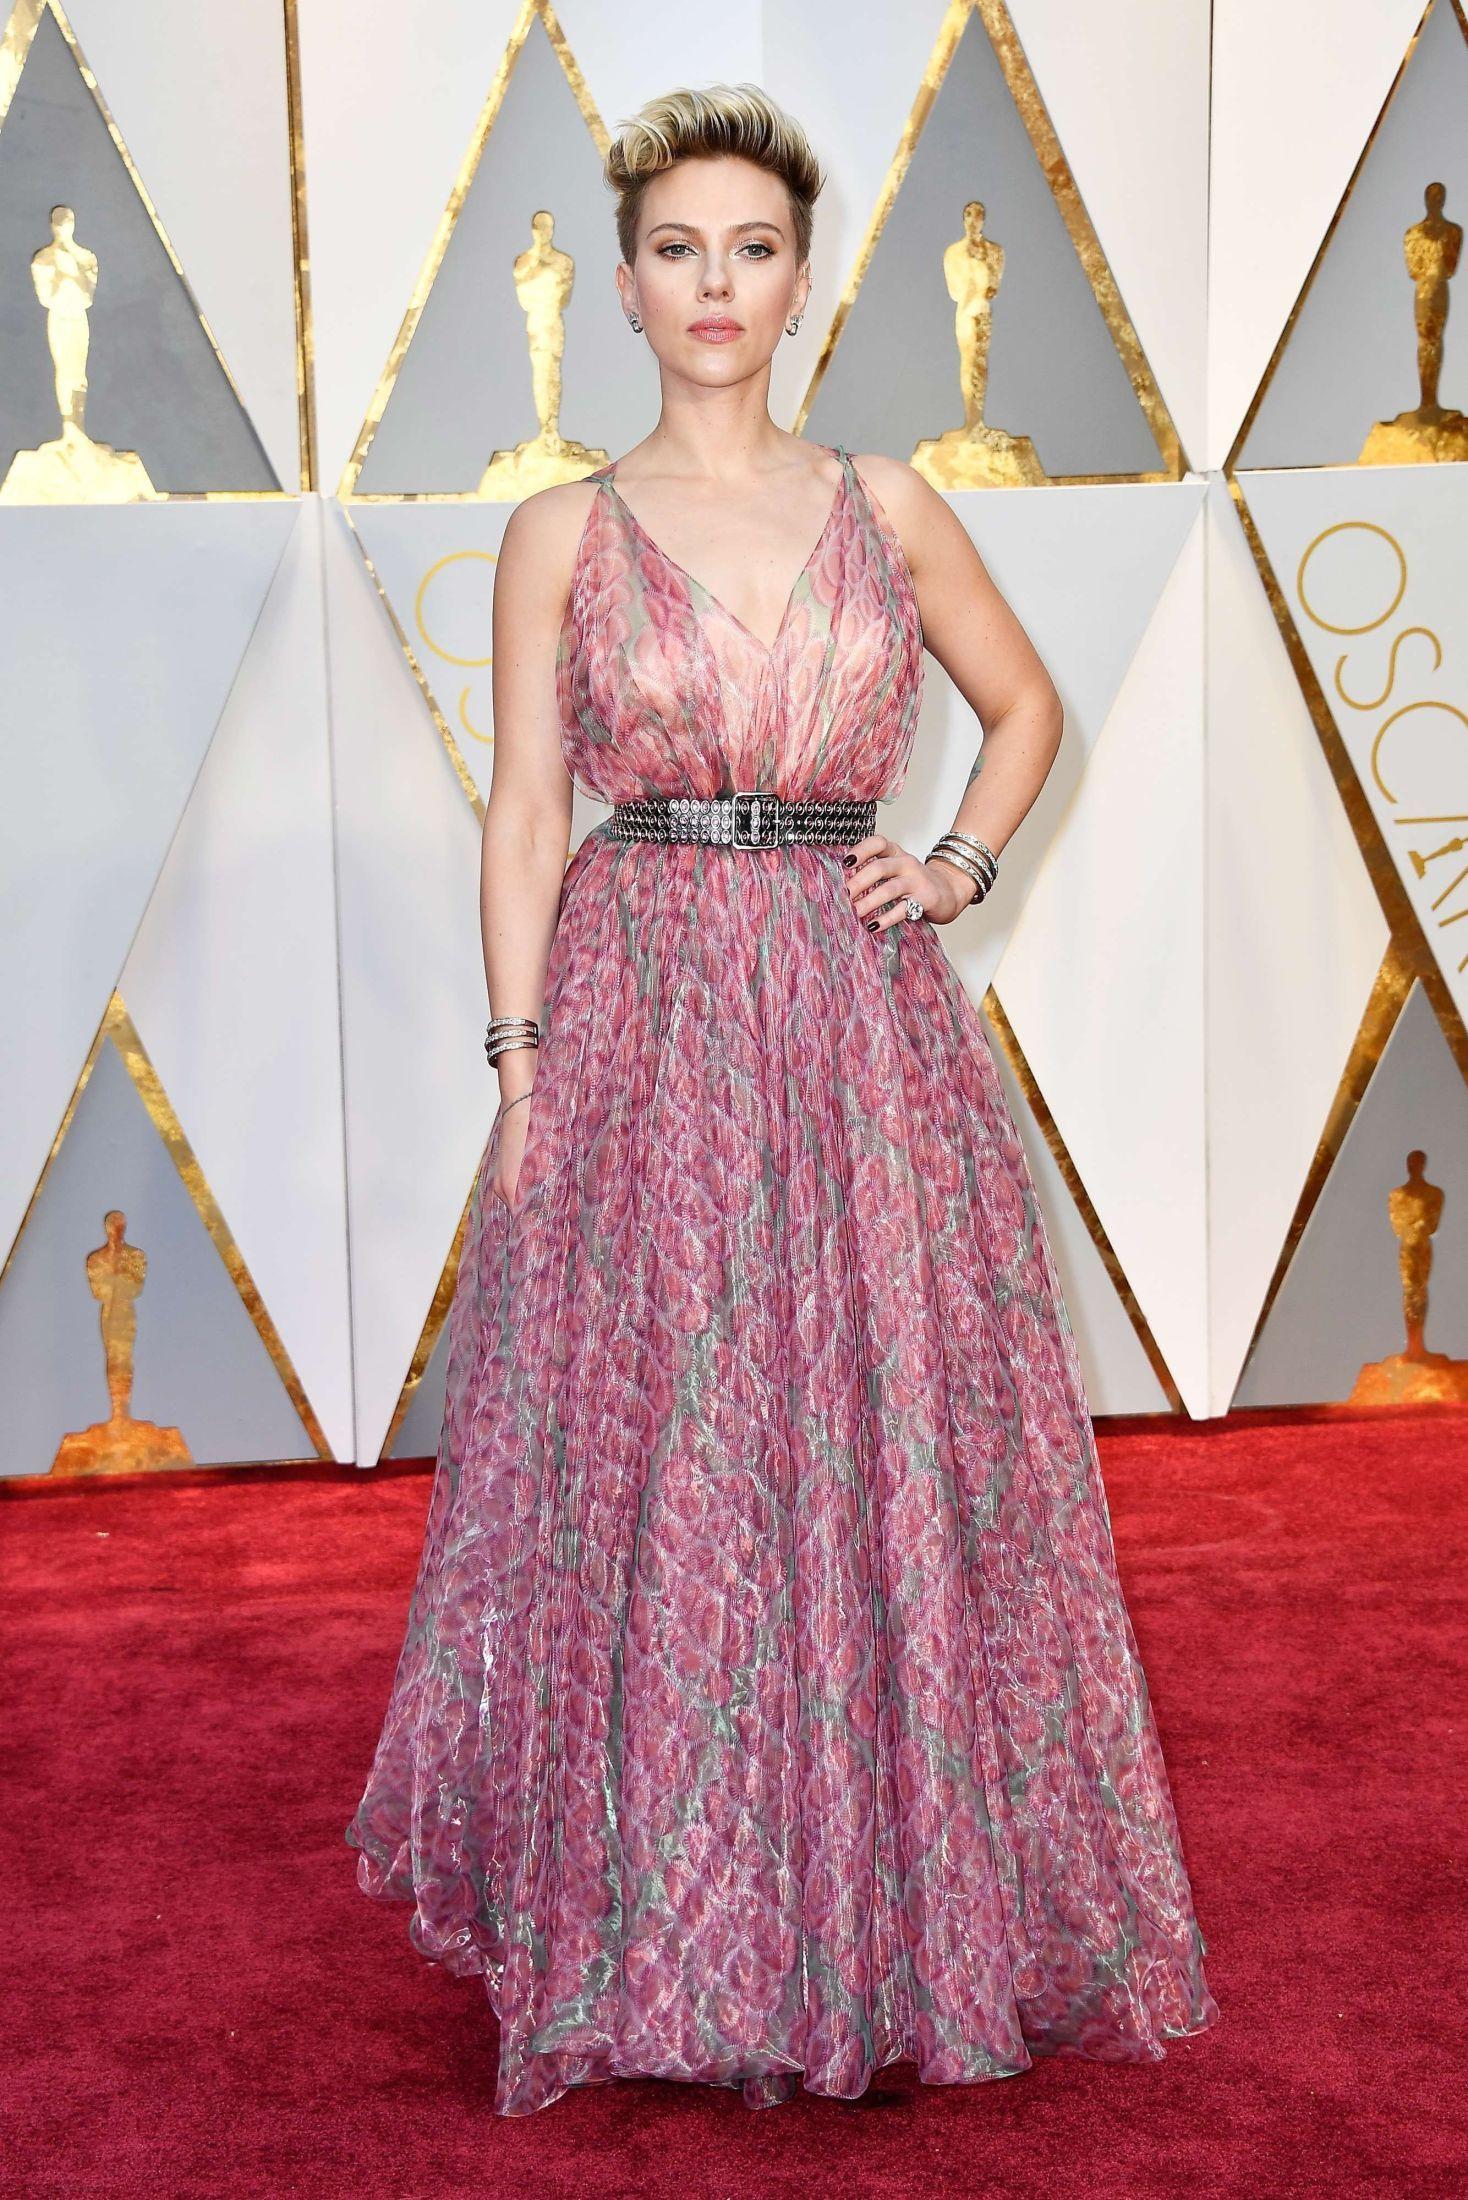 ROCKA: Scarlett Johansson Gikk for en rosamønstret kjole med sort, rocka tilbehør. Foto: NTB scanpix